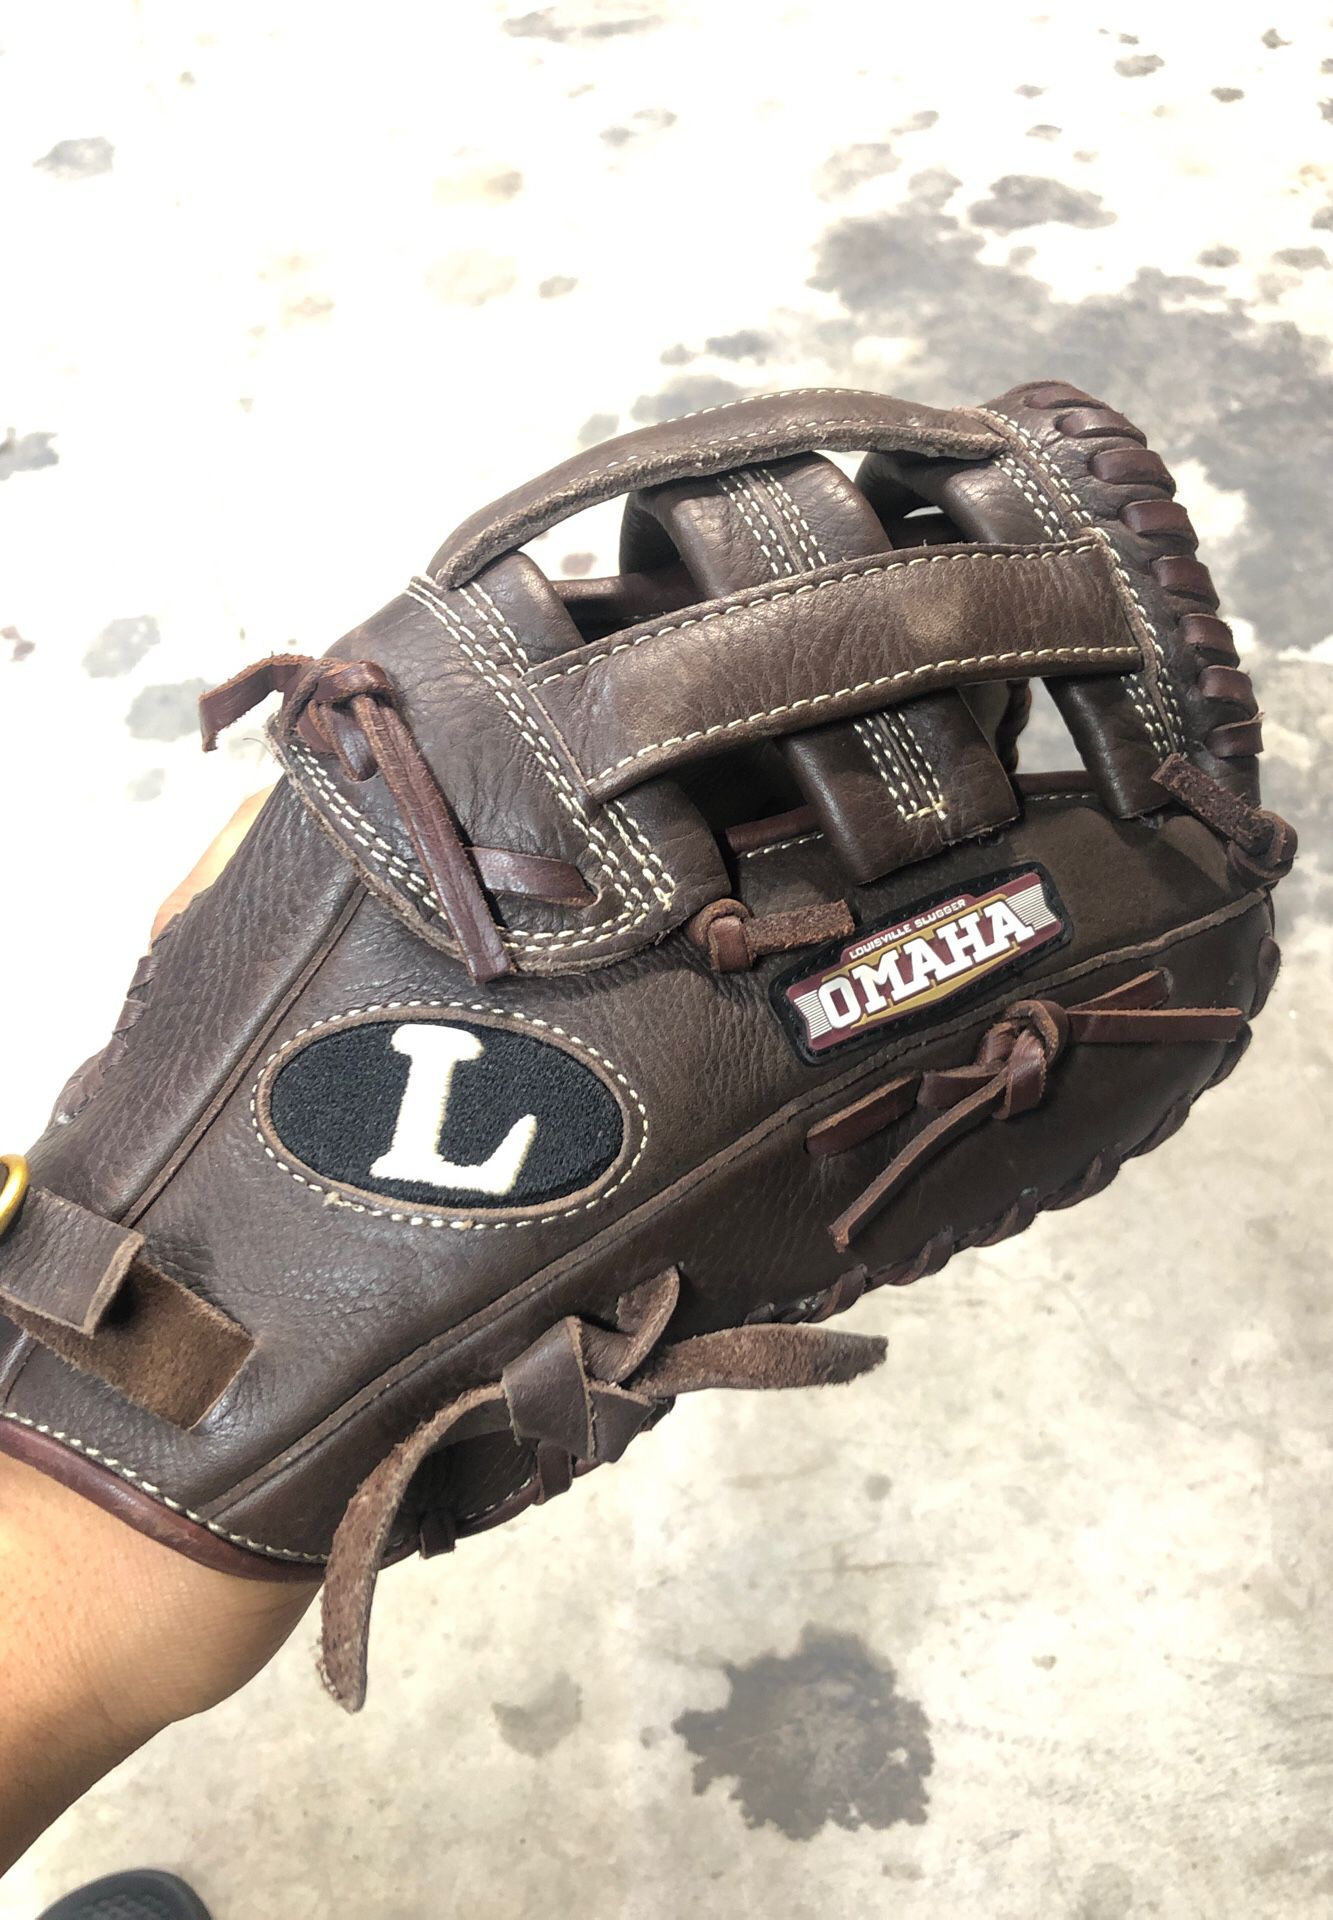 Brand New Omaha Pro baseball glove for first base